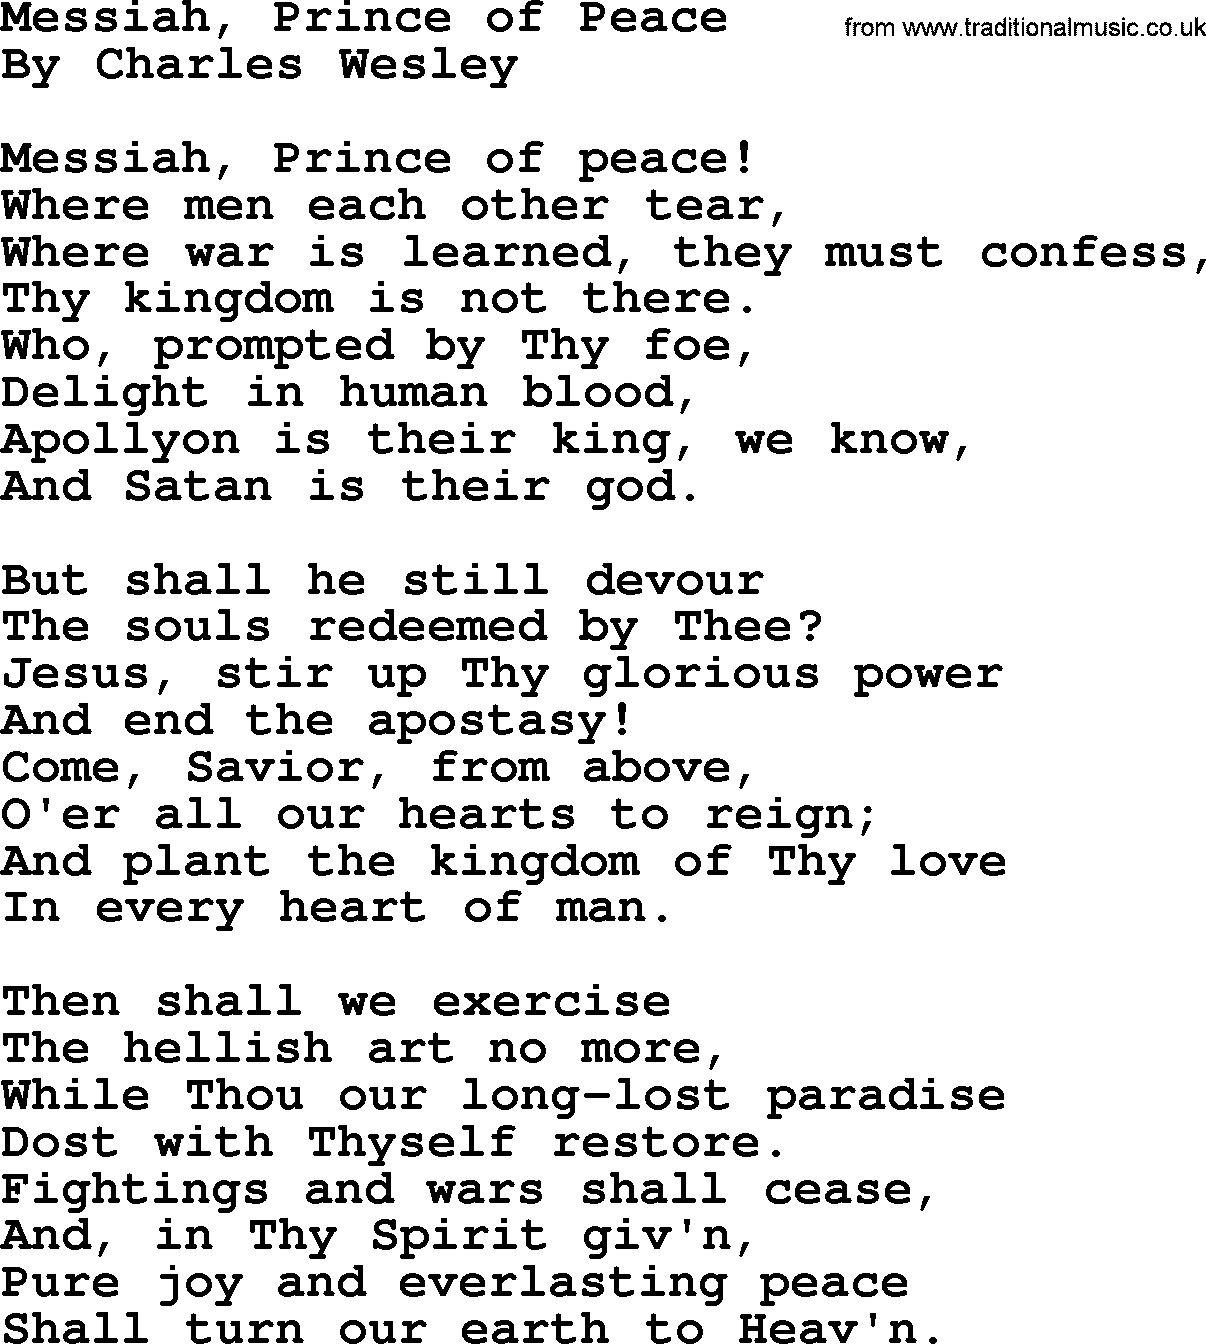 Charles Wesley hymn: Messiah, Prince of Peace, lyrics